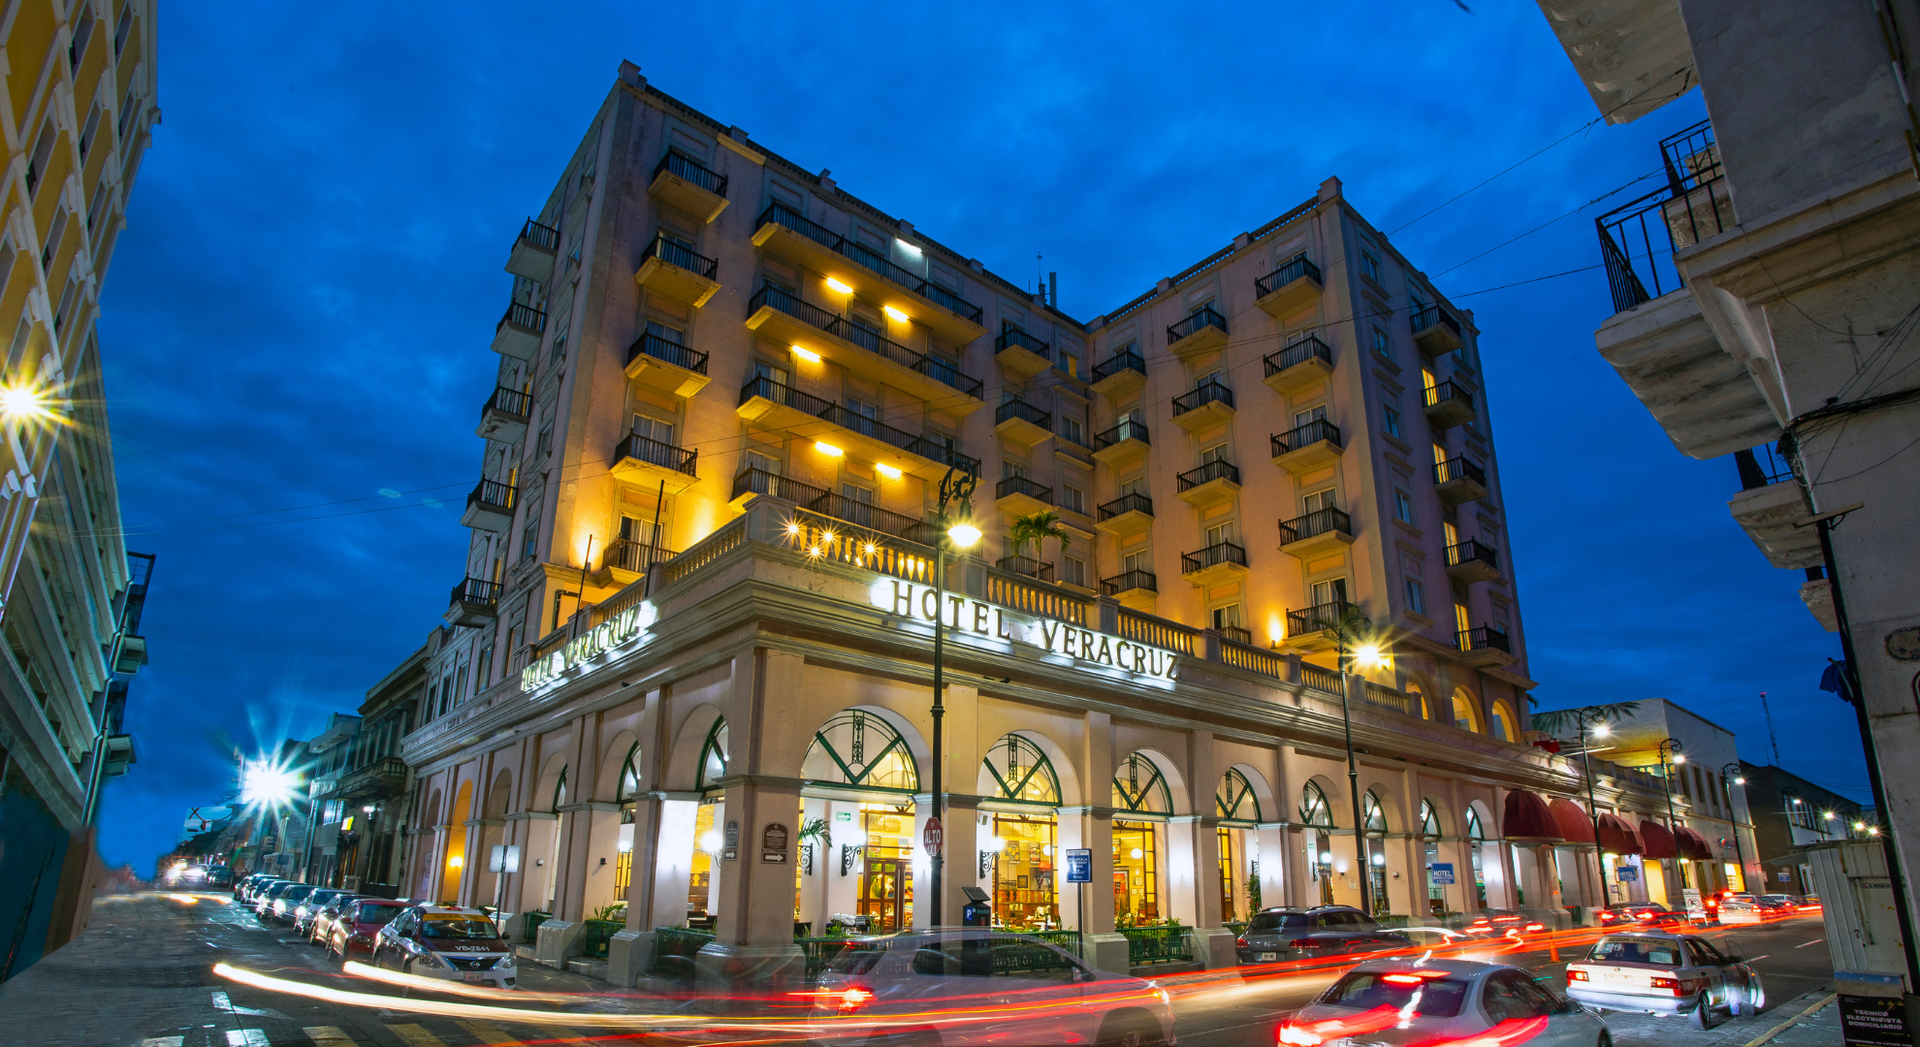 Hotel veracruz centro histórico Hotel Veracruz Centro Histórico